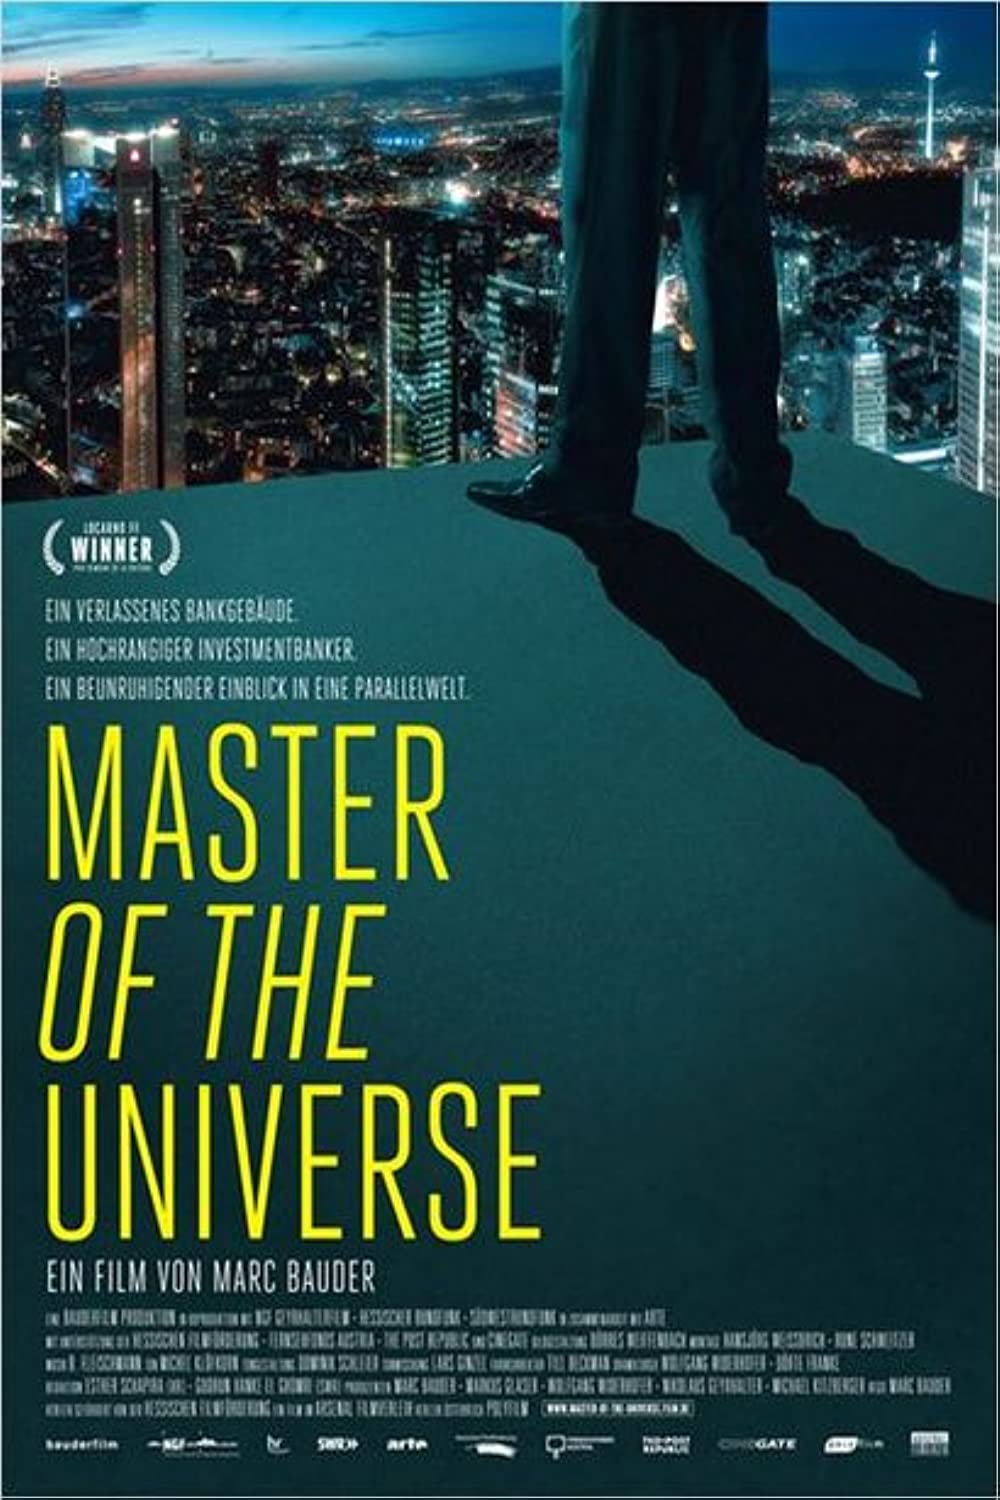 Filmbeschreibung zu Master of the Universe